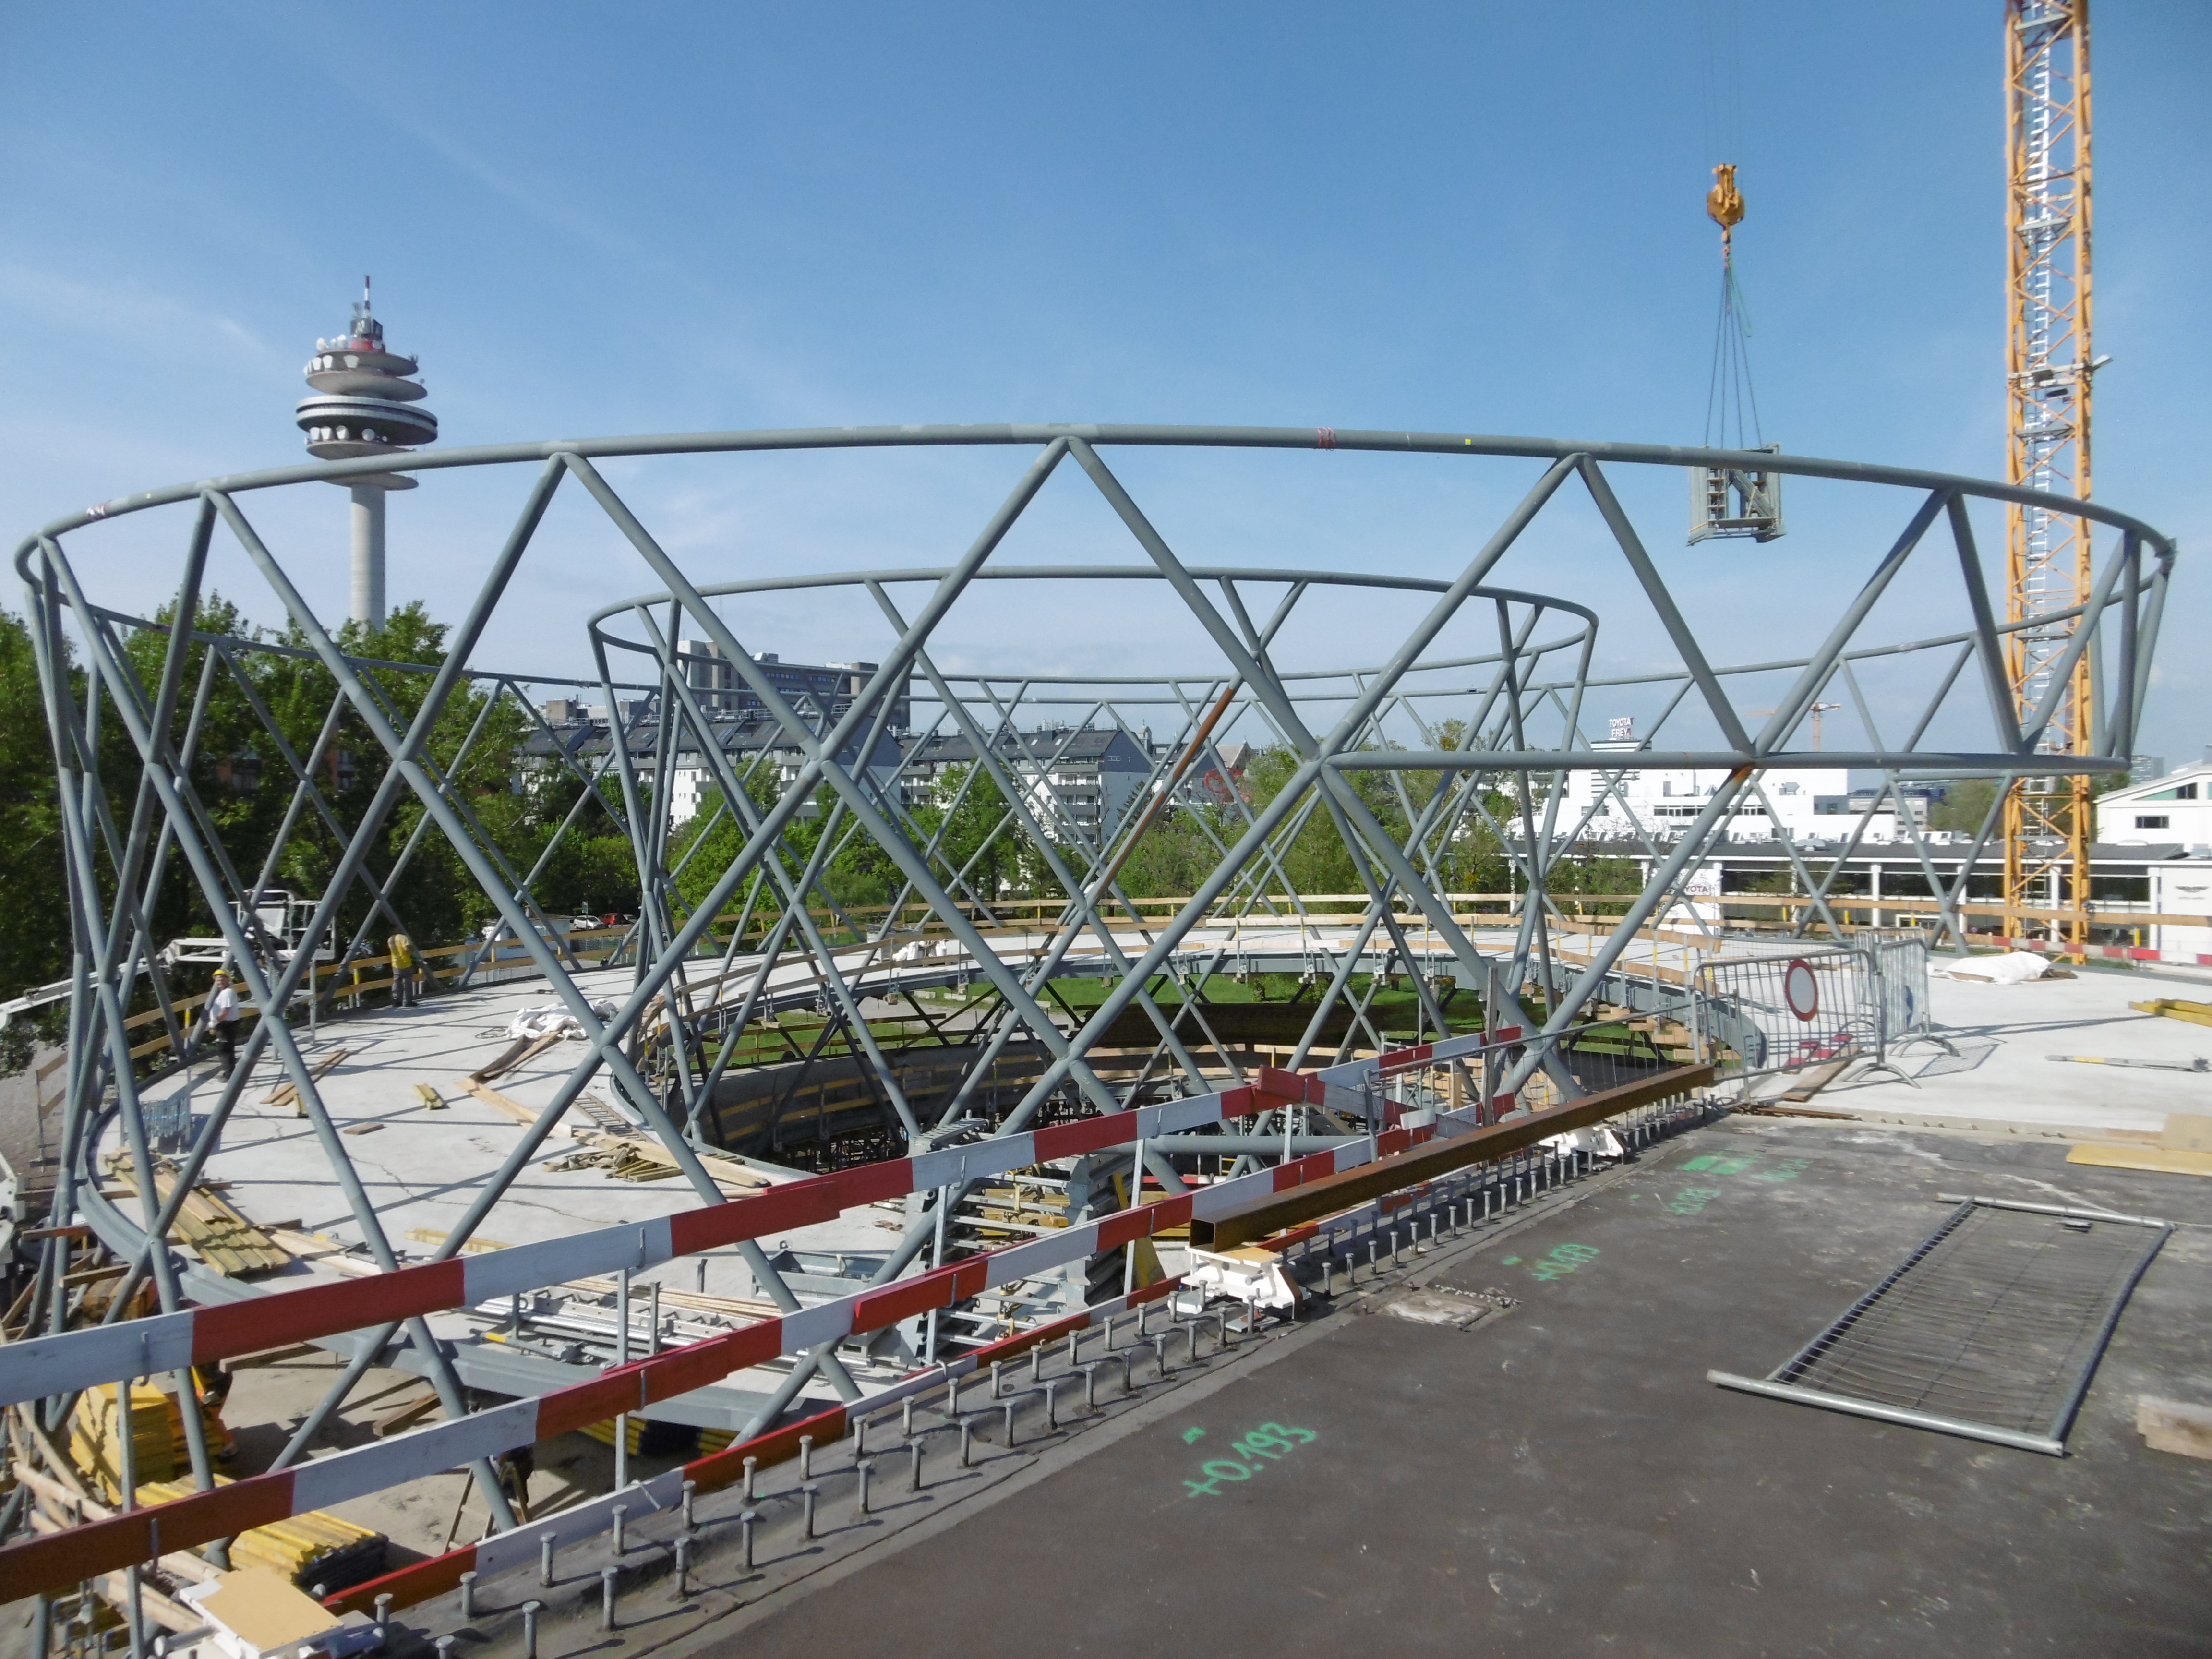 Brückenbau, Wien - Wegen- en bruggenbouw